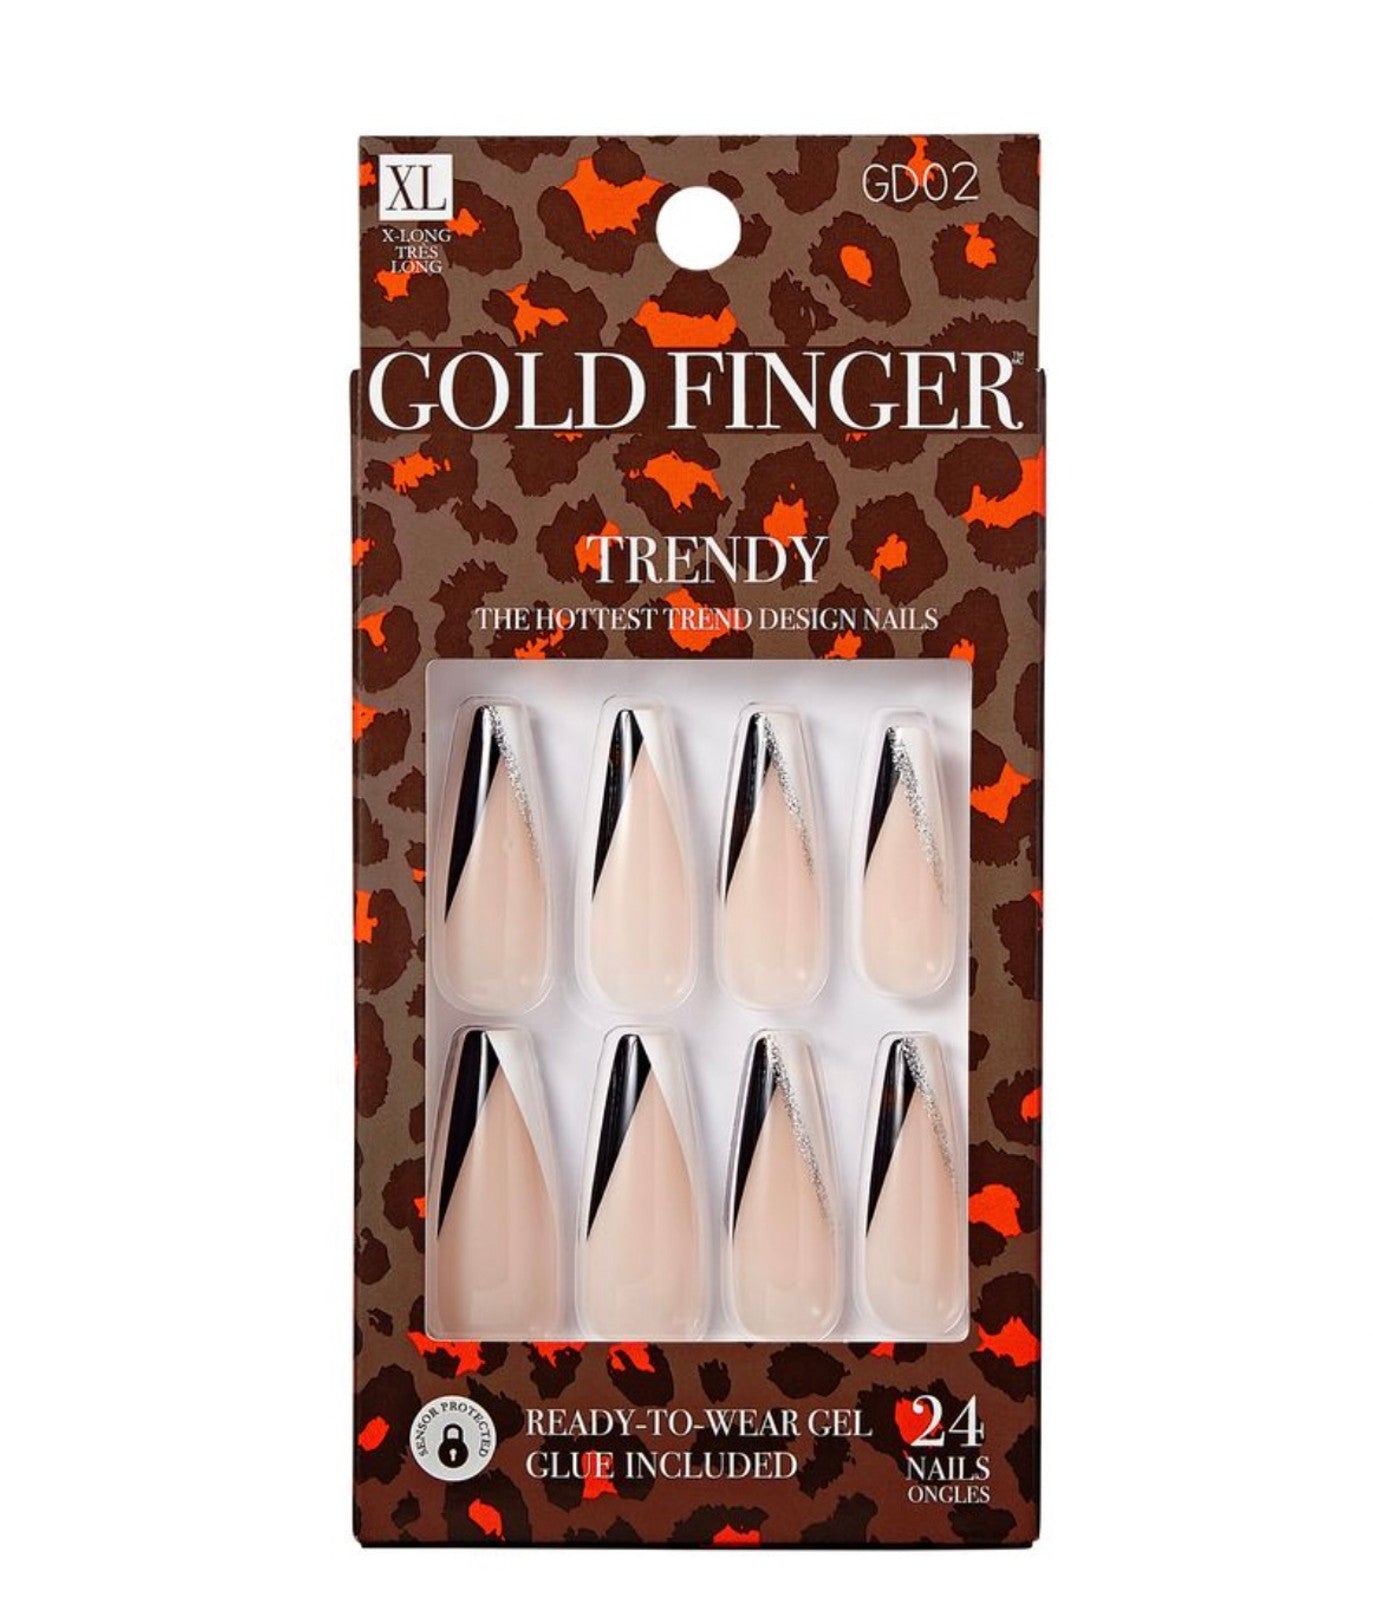 Gold Finger Holiday Limited Edition 24 Nails - Gold Sparkles - Walmart.com